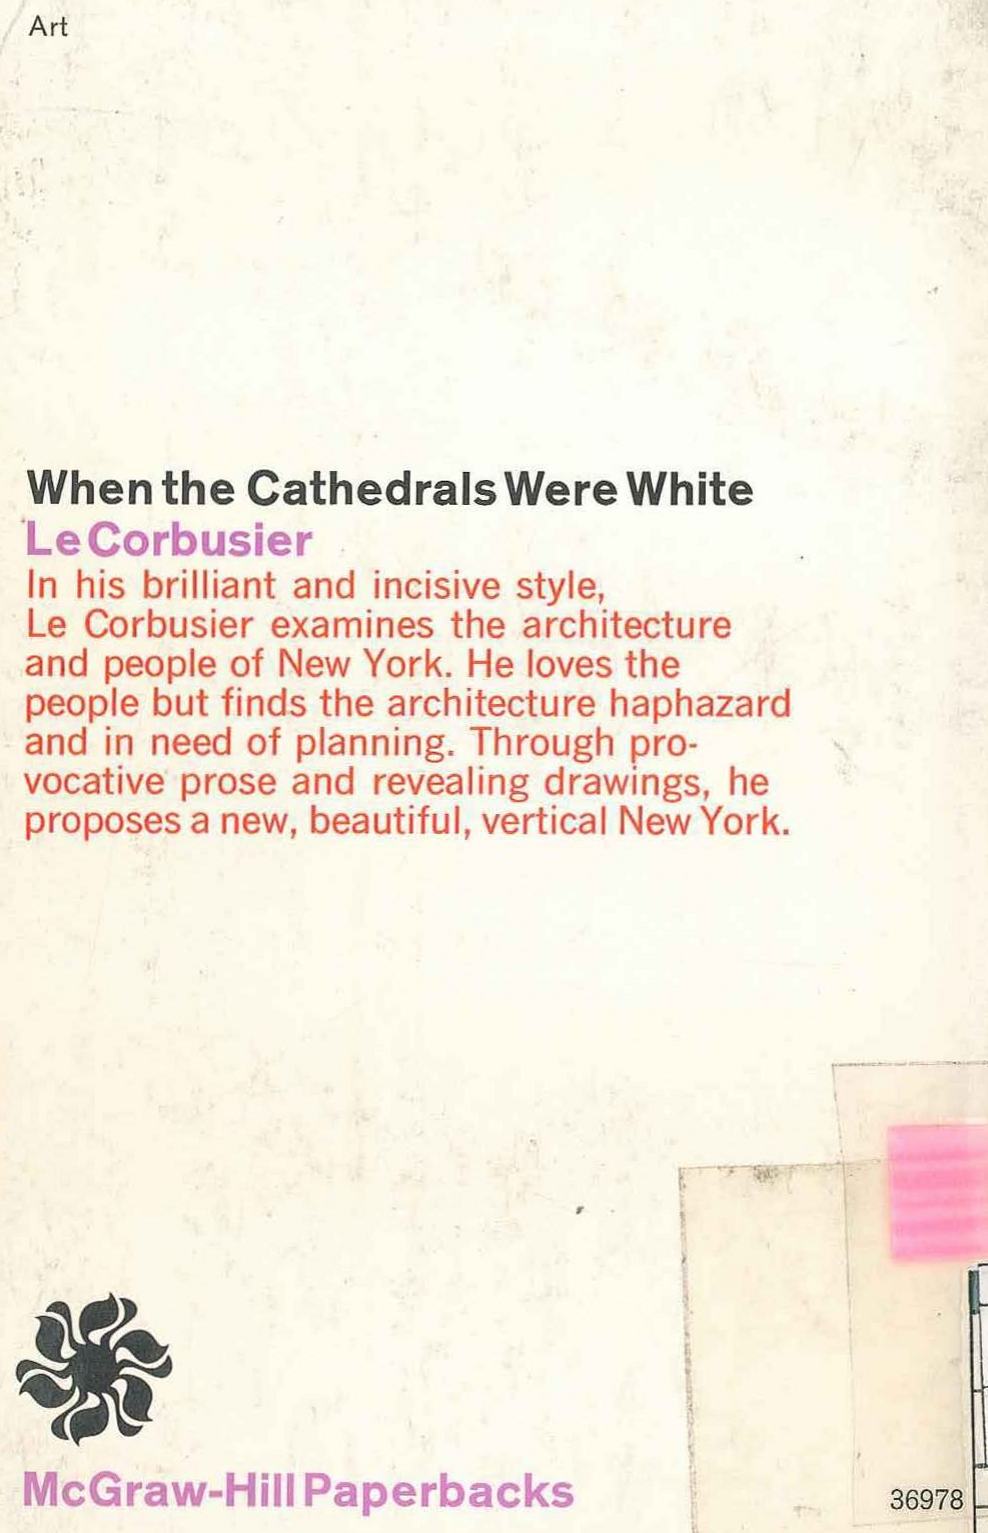 Le Corbusier. When the Cathedrals Were White